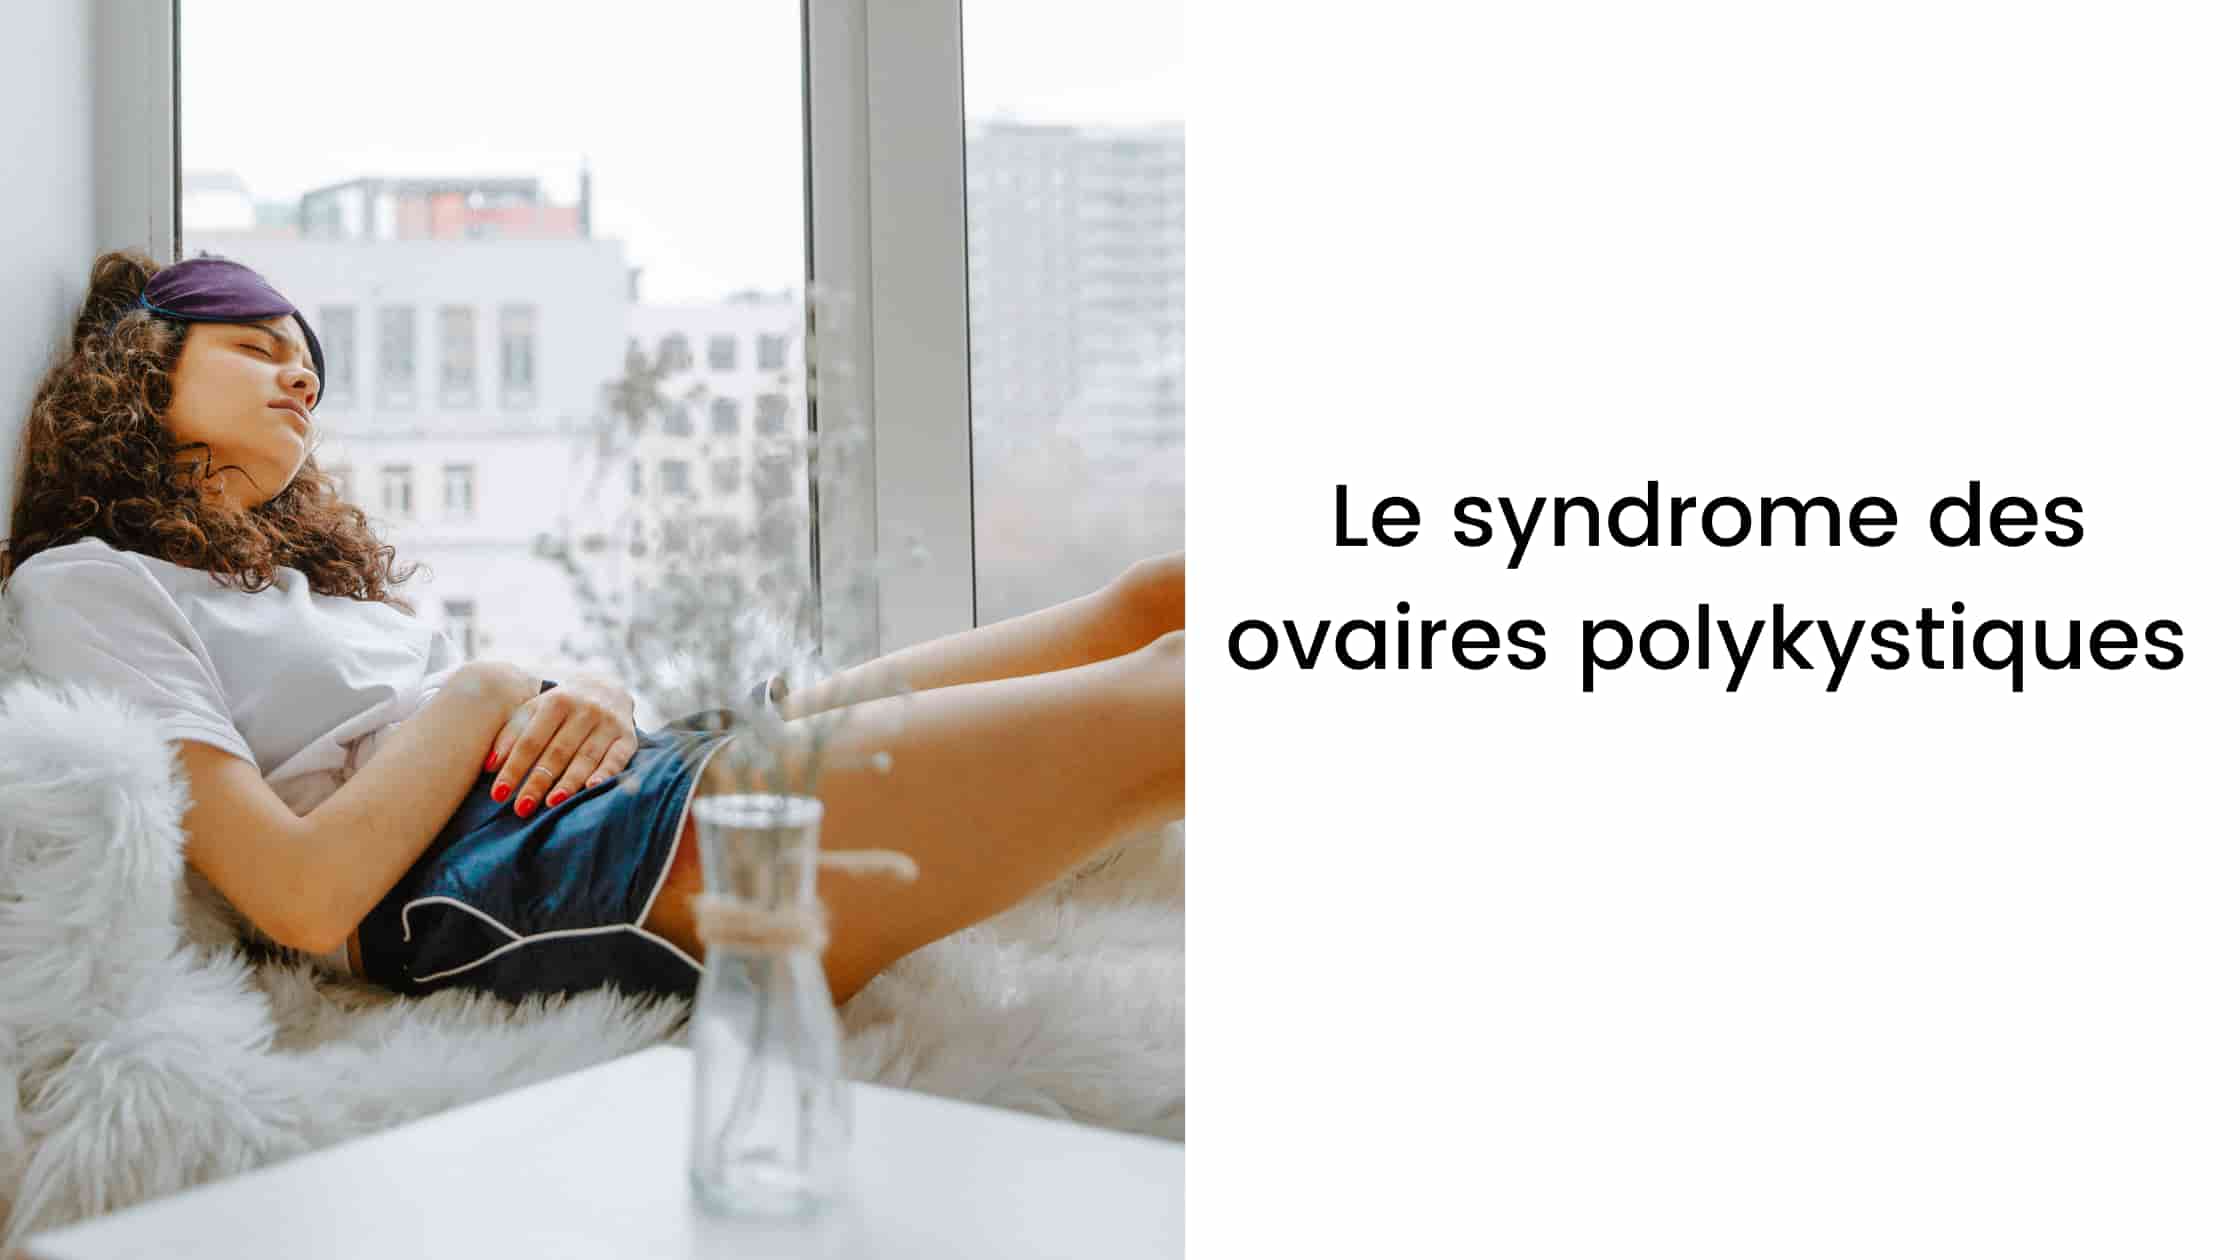 Le syndrome des ovaires polykystiques